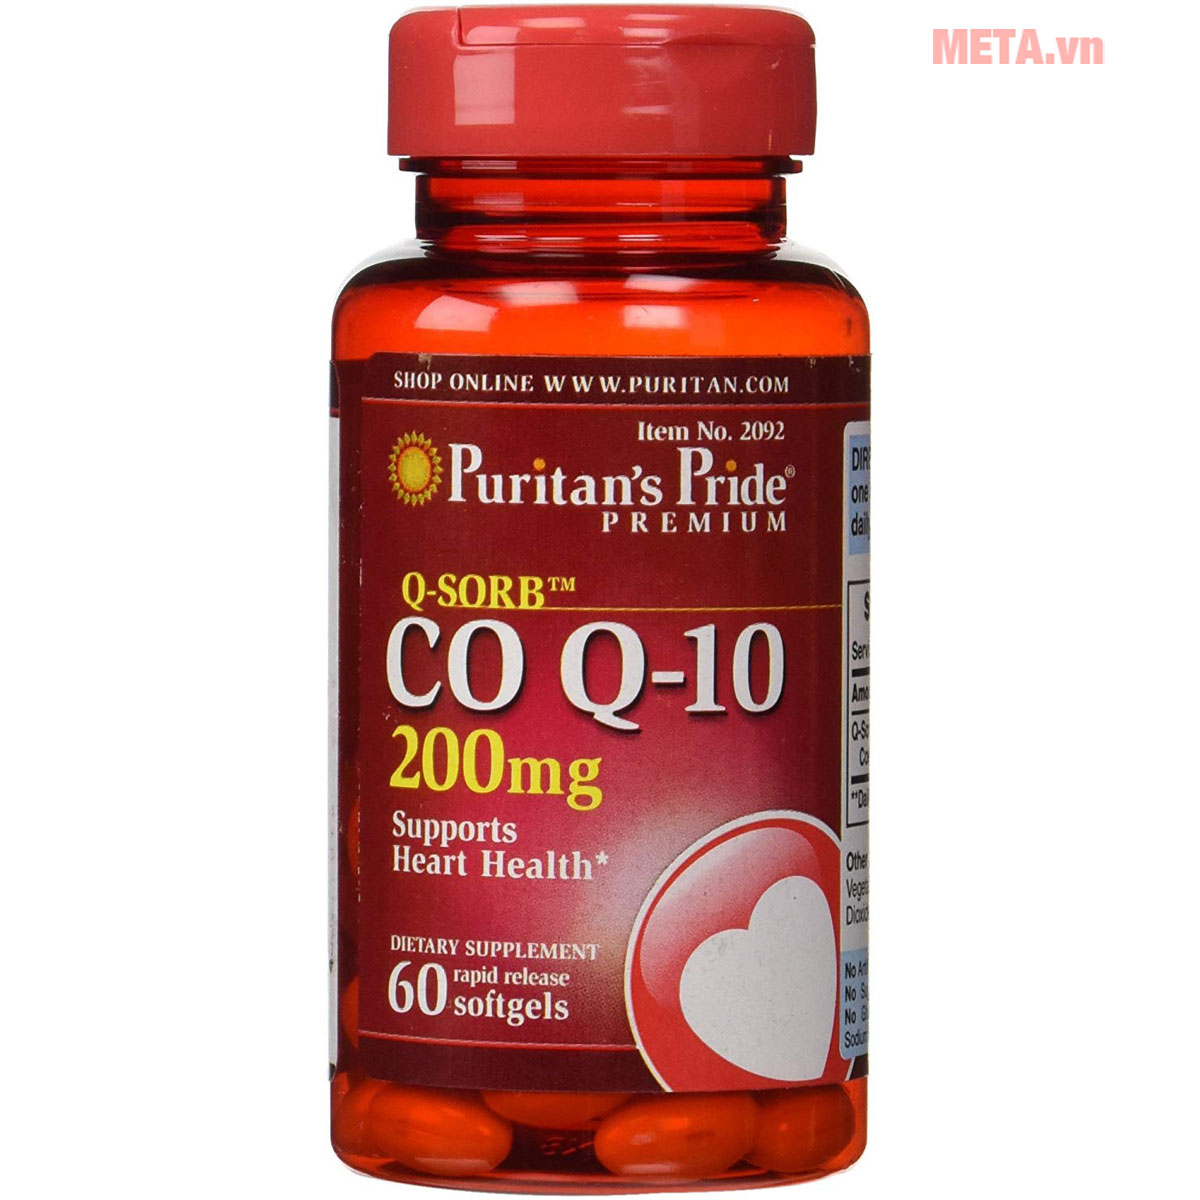 Puritan's Pride Q-SORB™ Co Q-10 200mg (2092)  